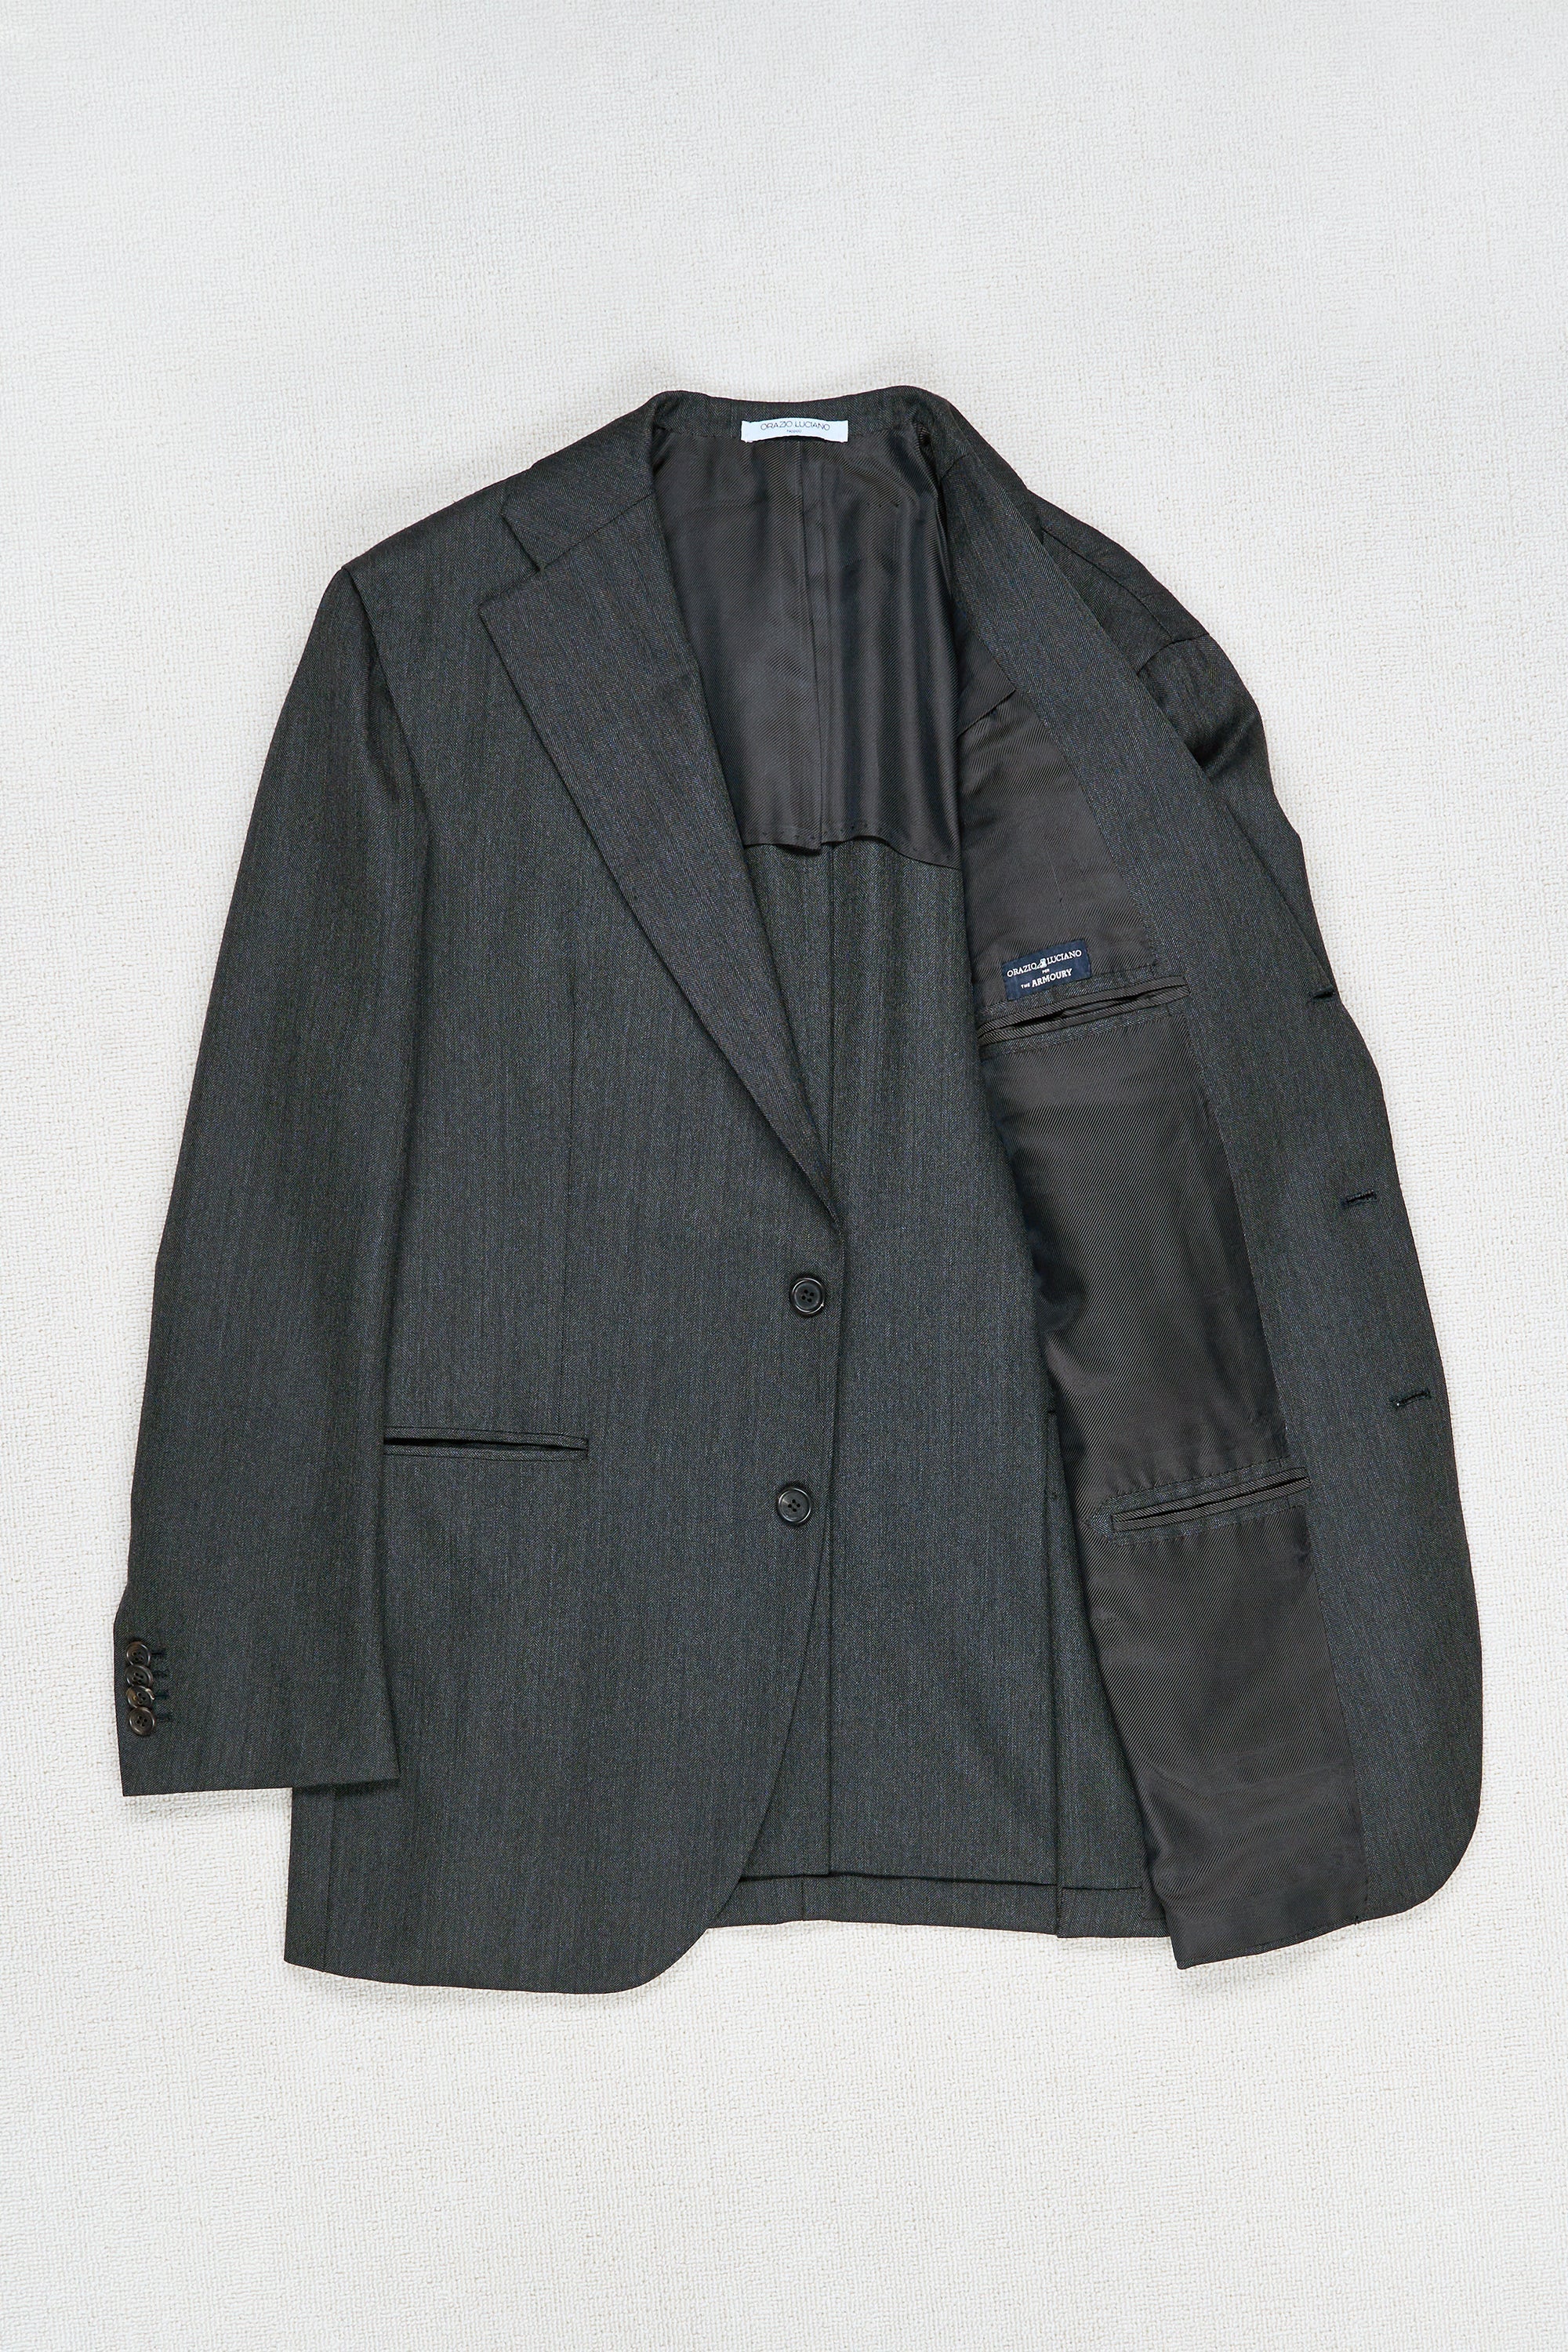 Orazio Luciano Dark Grey Herringbone Wool Suit